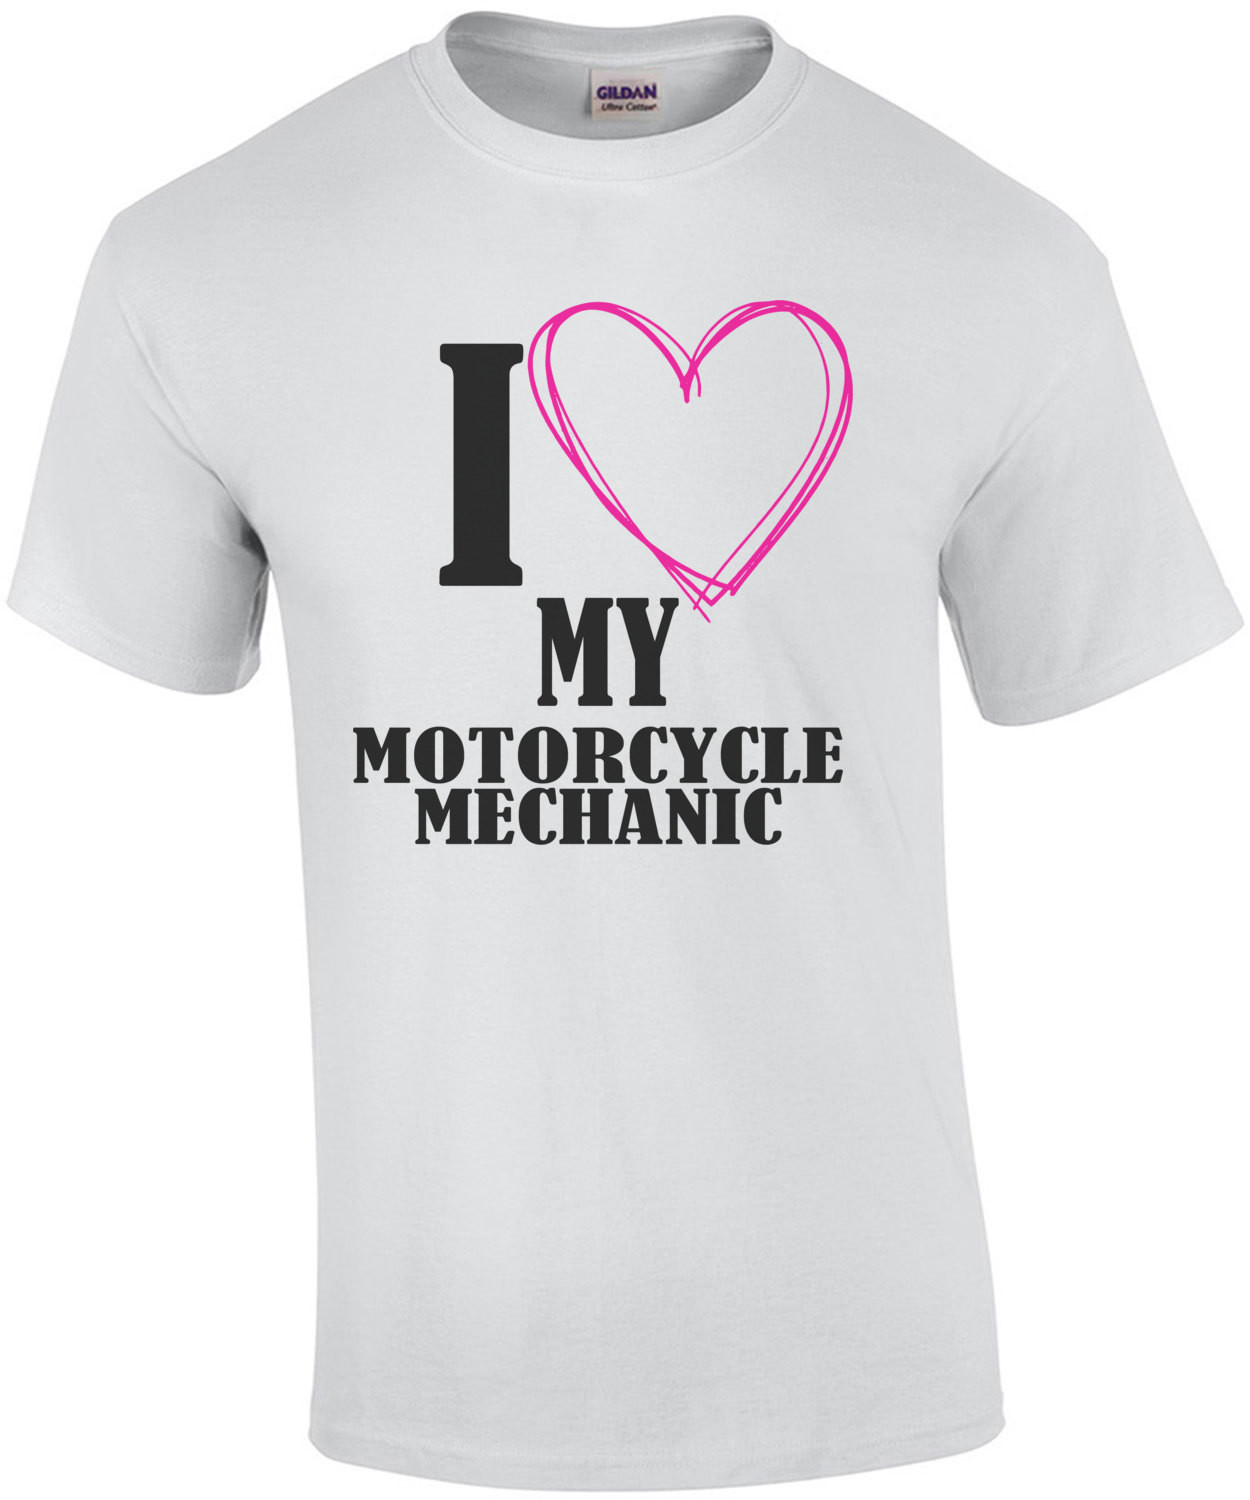 I Love My Motorcycle Mechanic T-Shirt